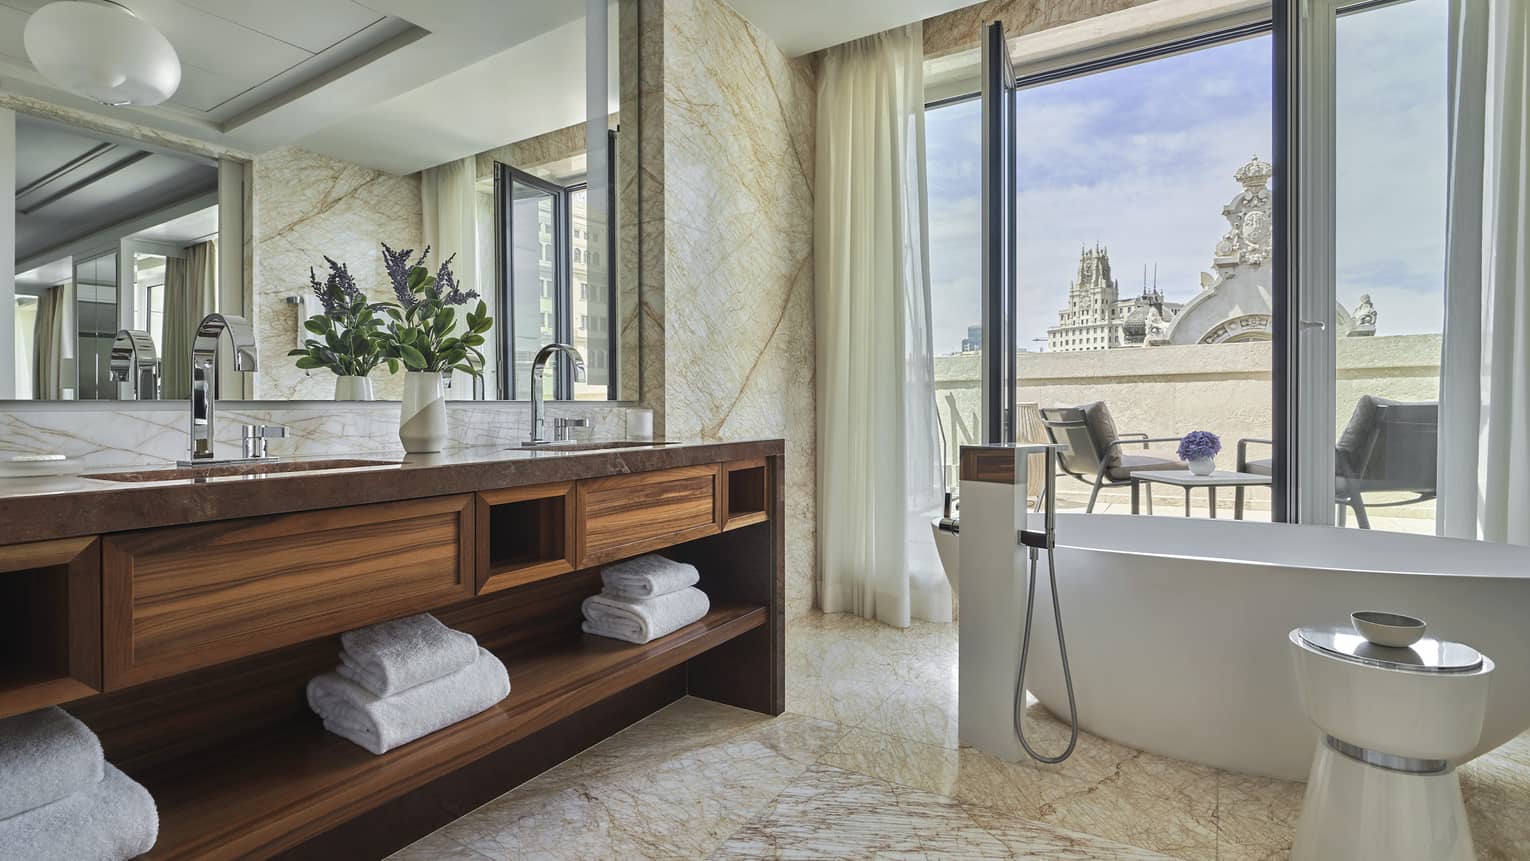 Guest bathroom with large soaking tub, double wooden vanity, mirror, marbled floors, floor-to-ceiling window